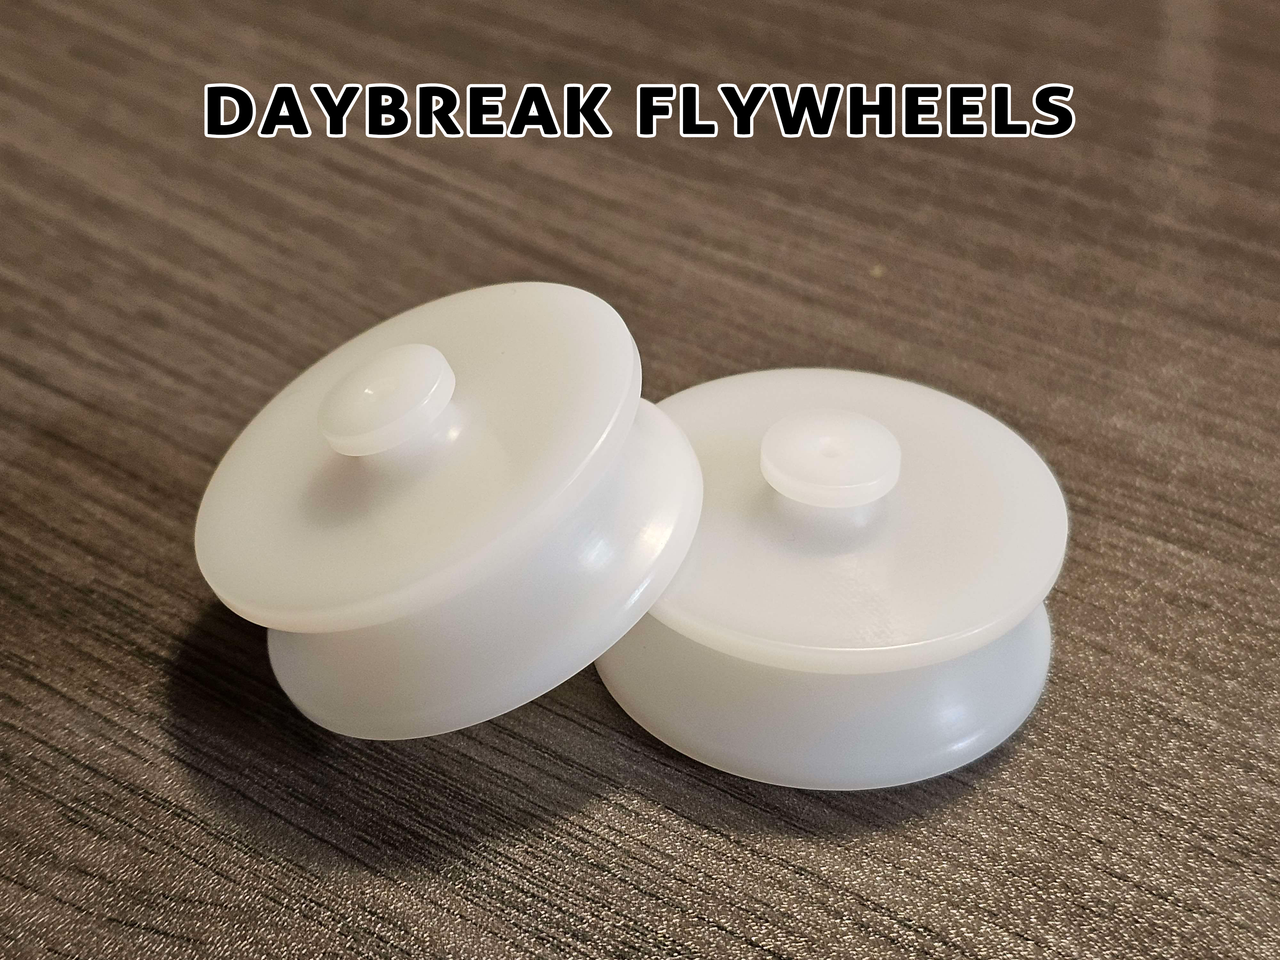 Daybreak Flywheels